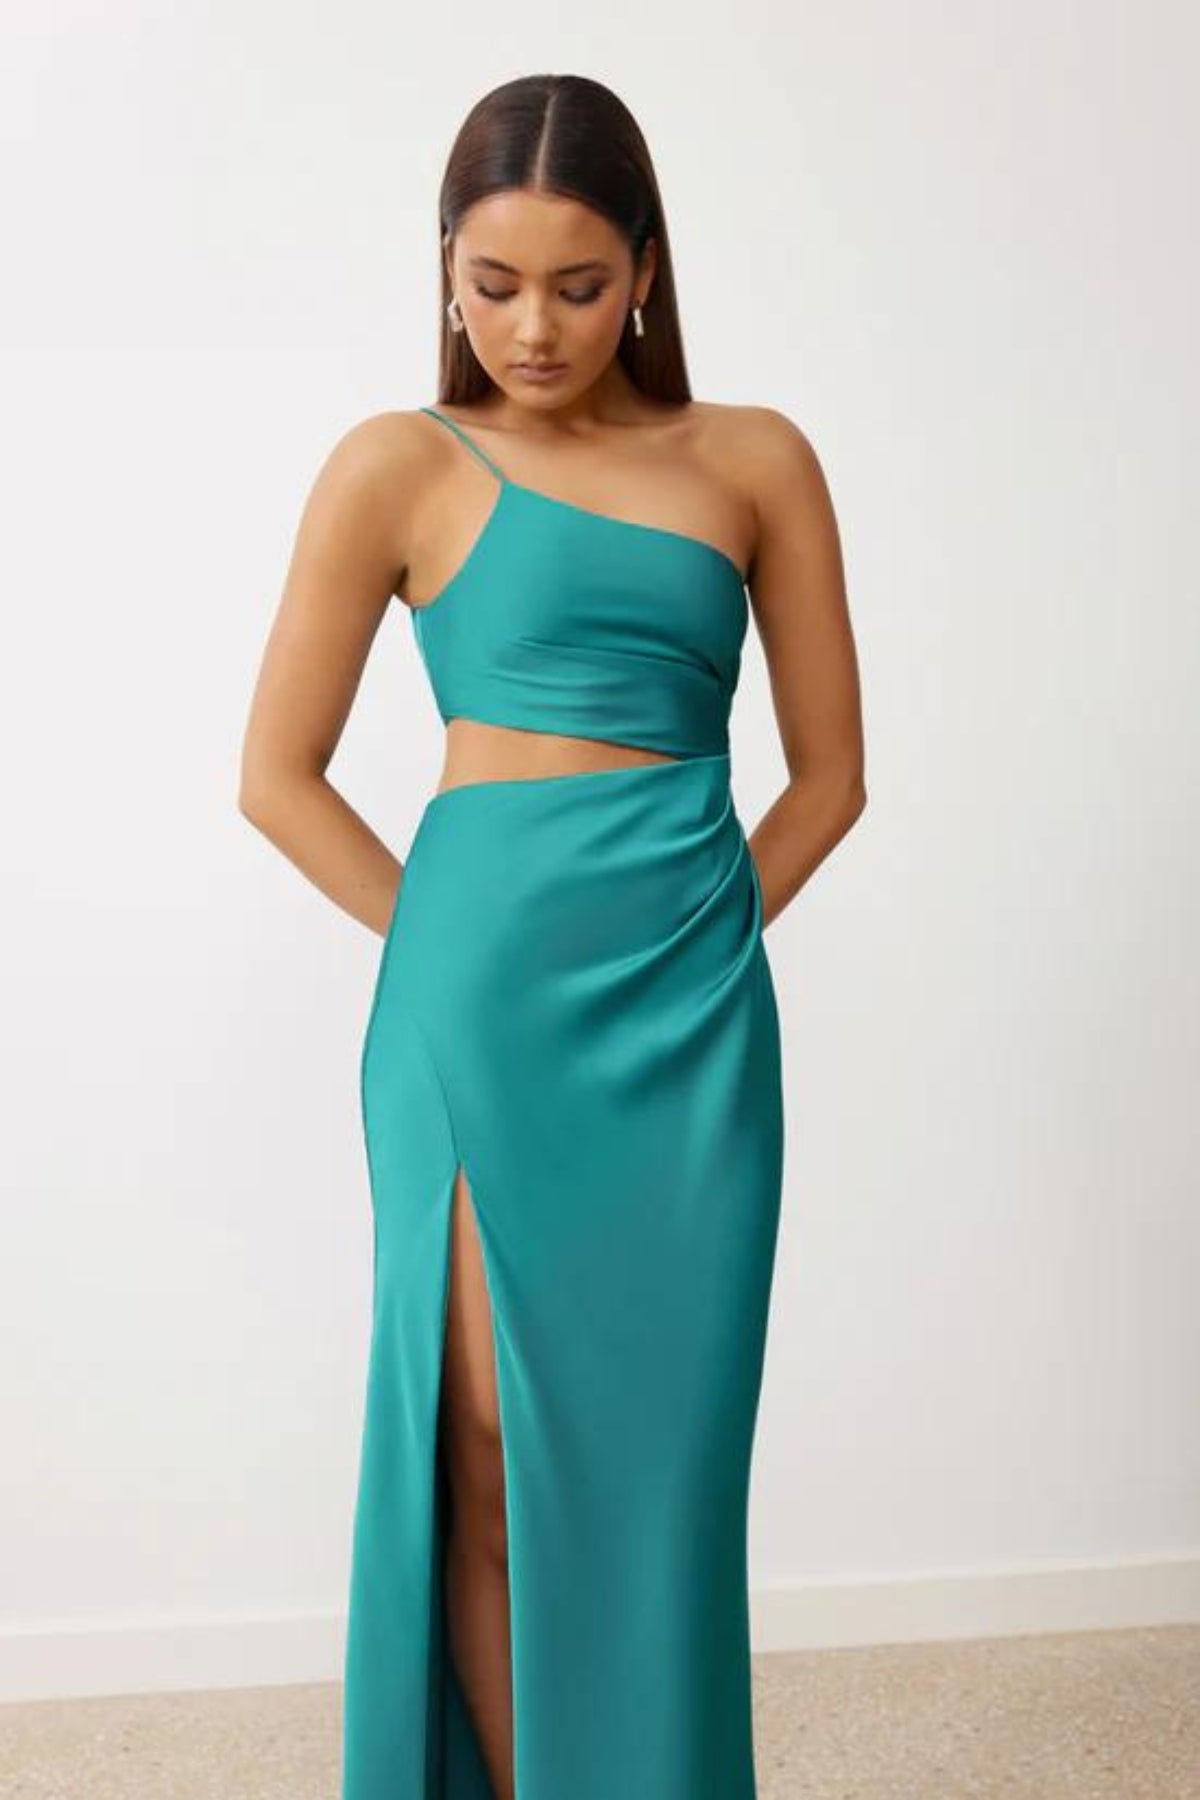 Lexi LEXI Delta Dress (Ocean Blue)- RRP $349 - 7_ed758708-1333-47ee-a4c2-2a752ad54e17.jpg